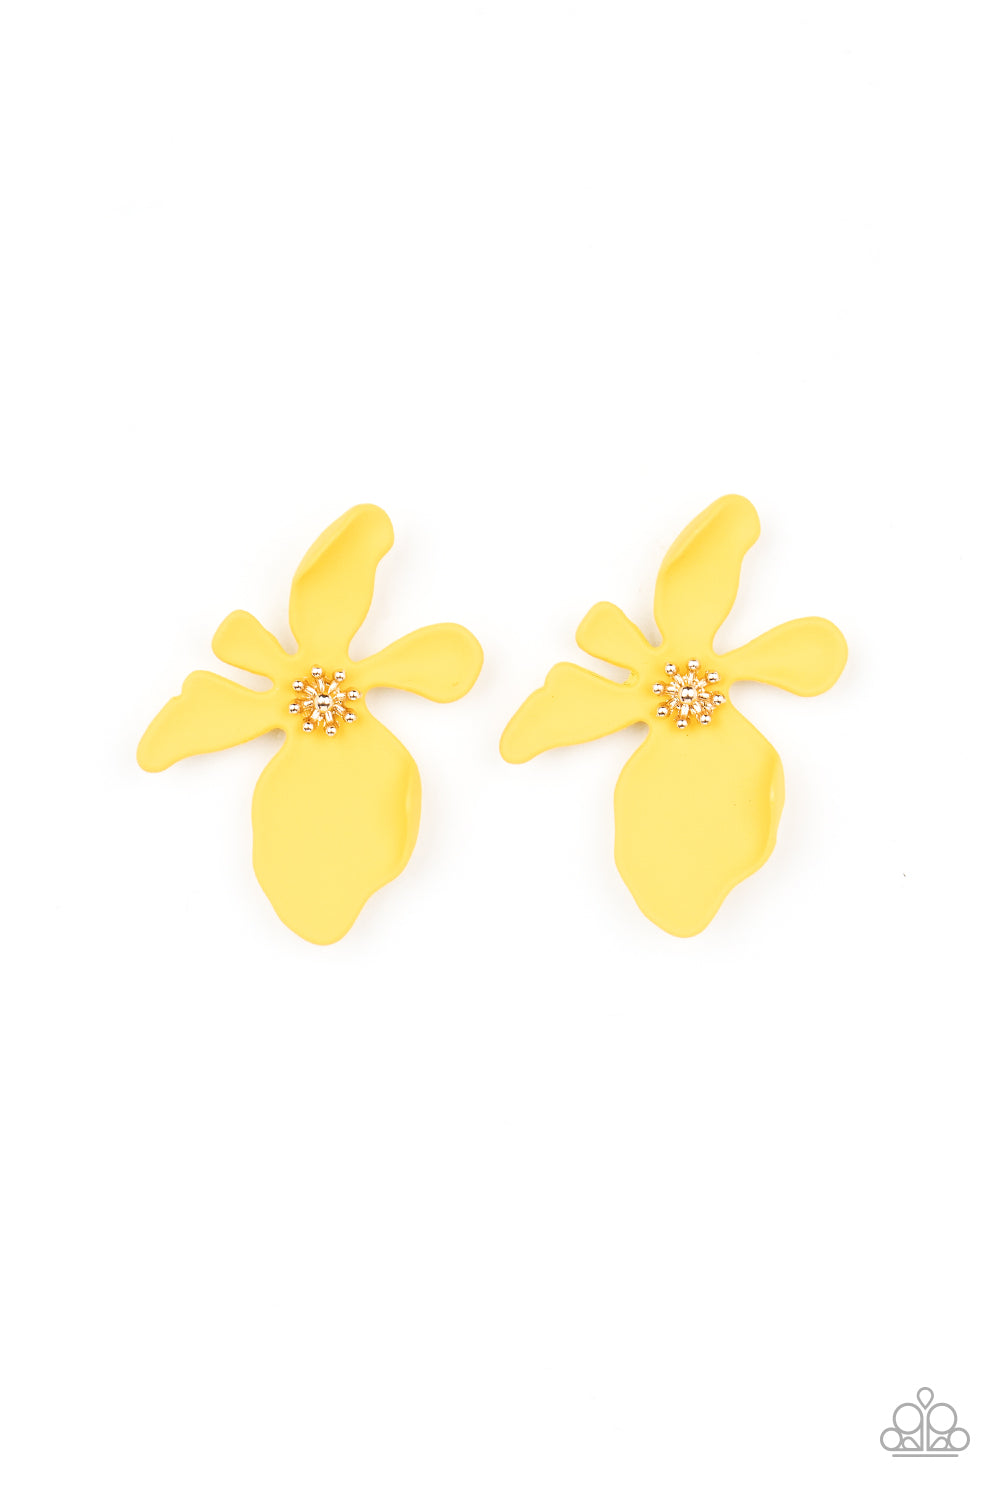 Hawaiian Heiress - Yellow Flower Earrings - Paparazzi Accessories